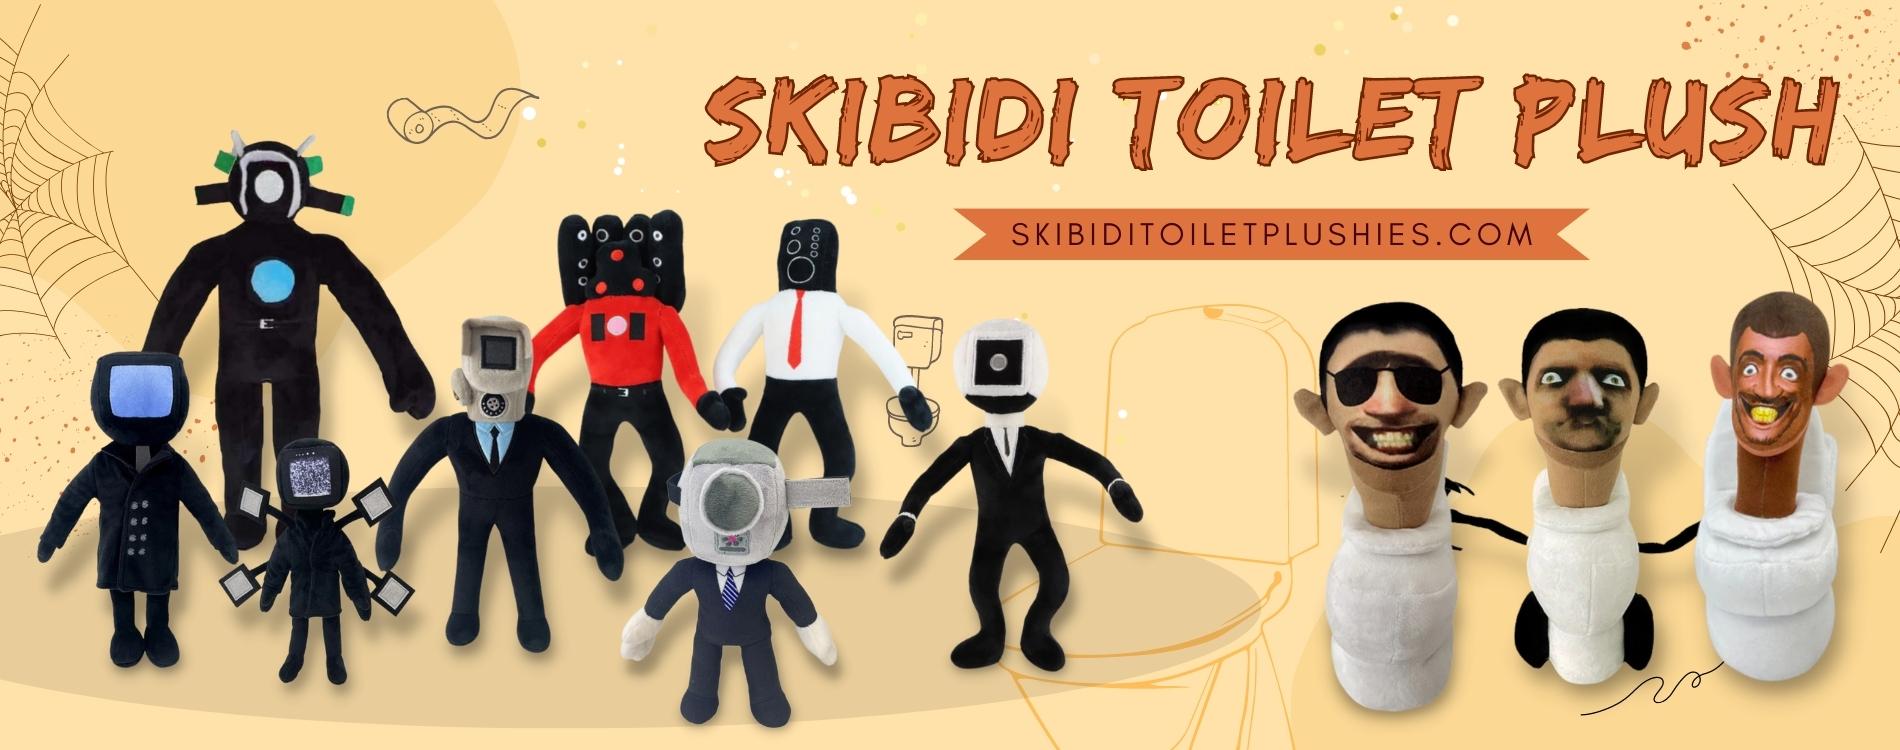 Skibidi Toilet Plush banner